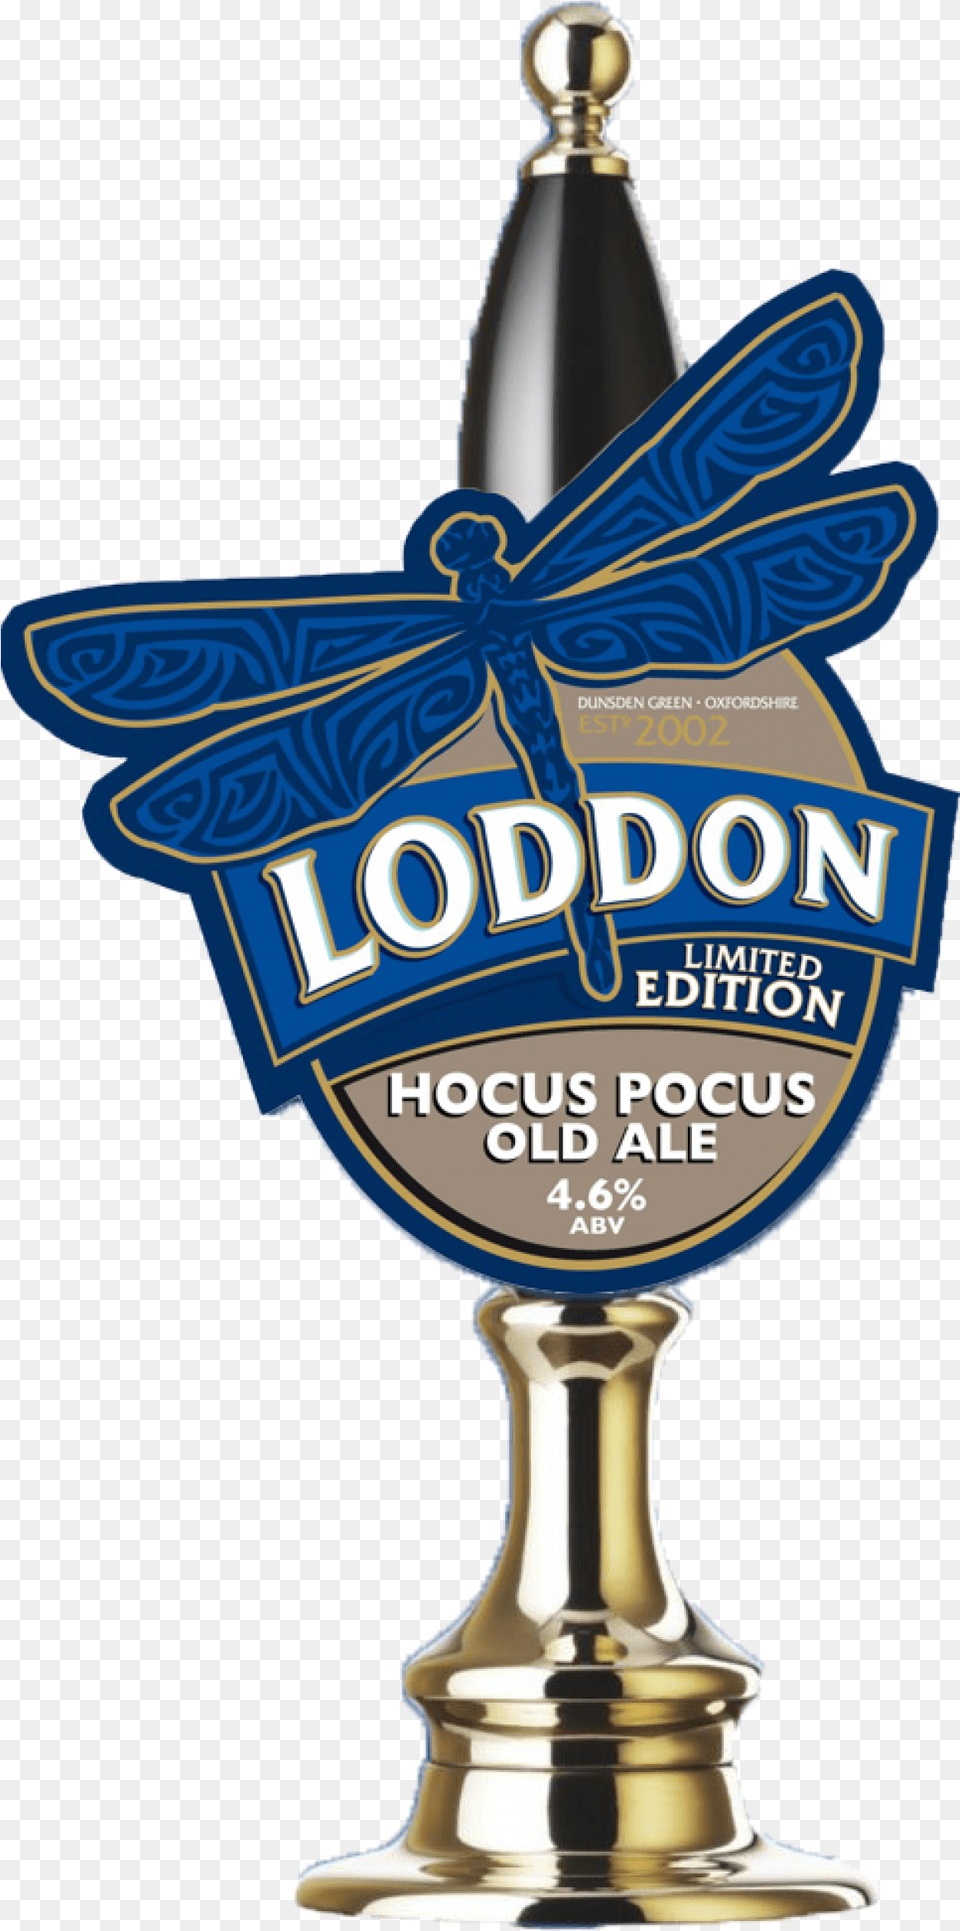 Northern Lights Orkney Brewery Loddon Hocus Pocus Png Image